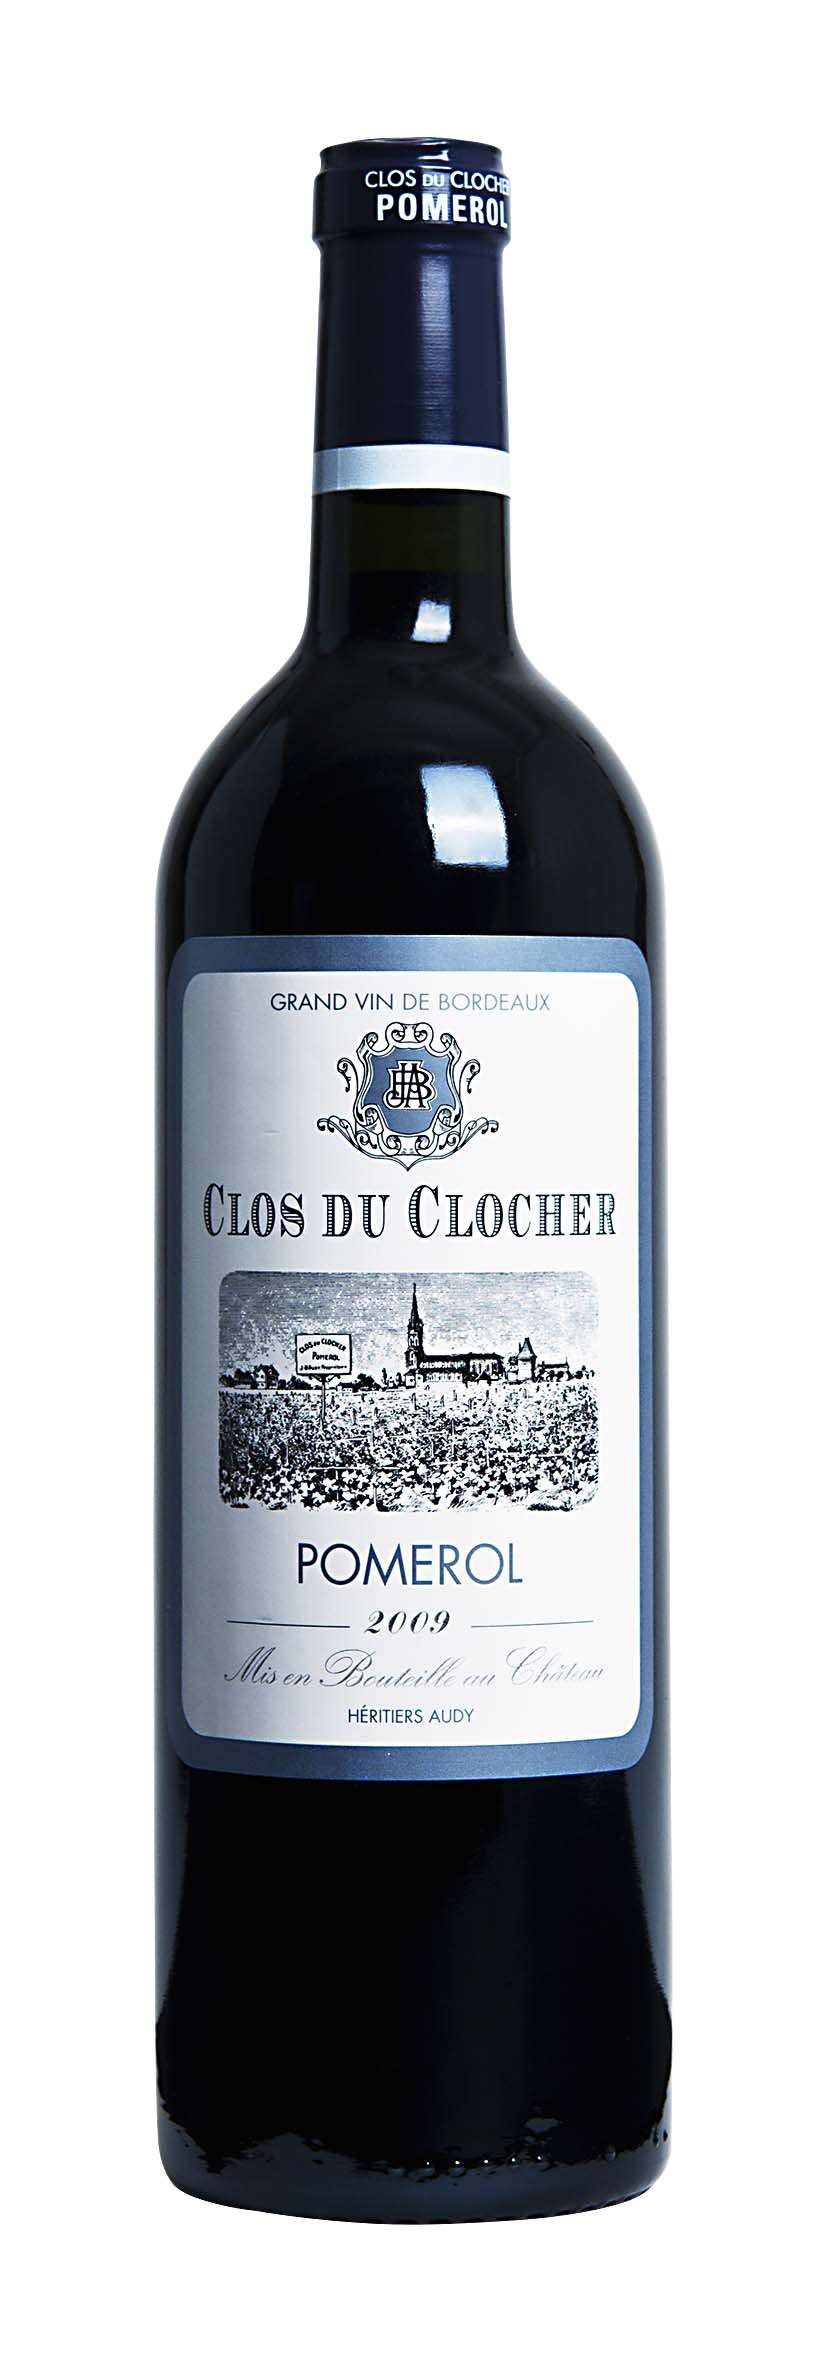 Pomerol AOC Clos du Clocher 2011